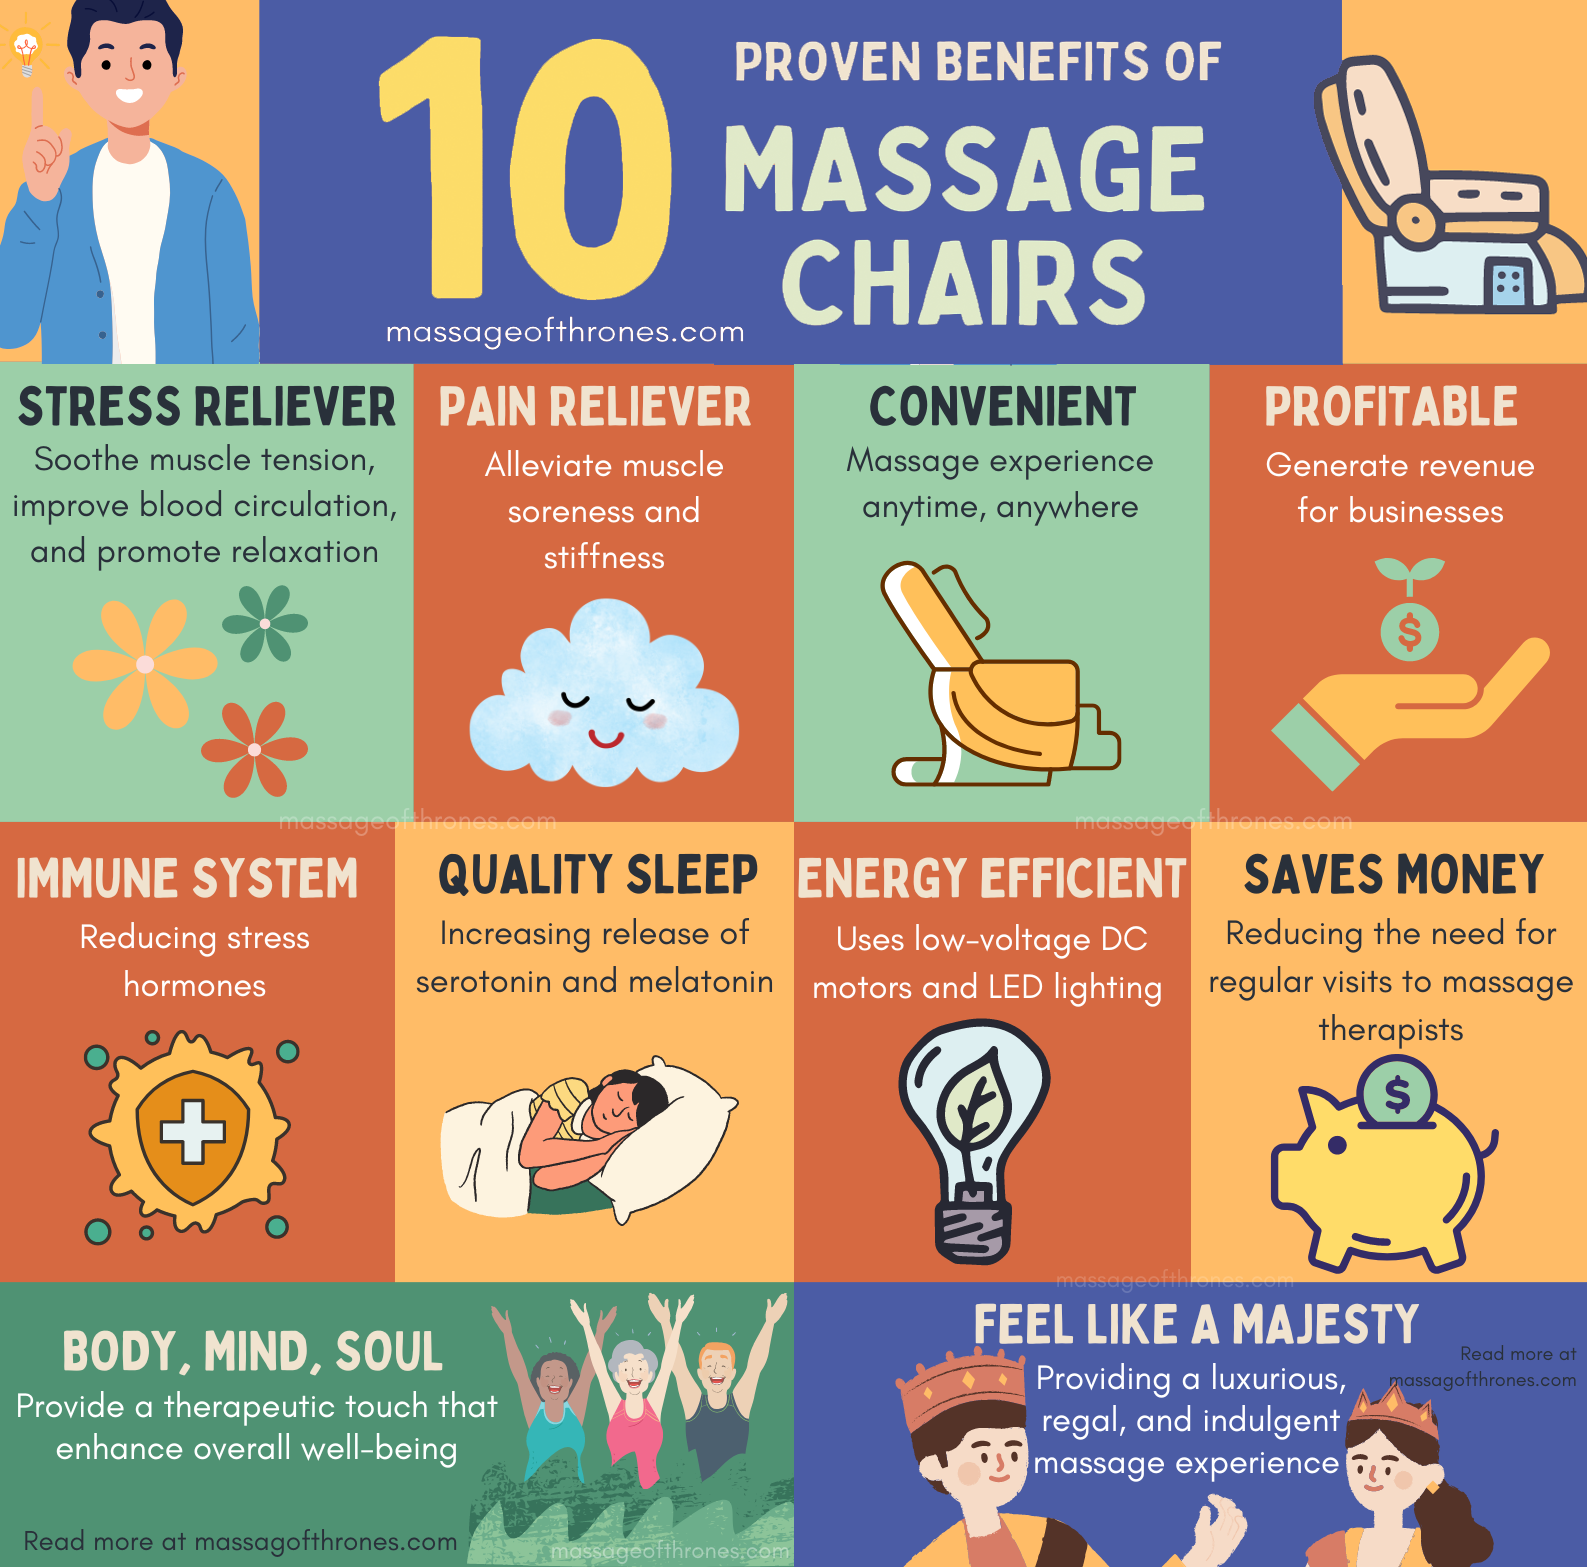 https://massageofthrones.com/wp-content/uploads/2020/08/10-proven-benefits-of-massage-chairs.png